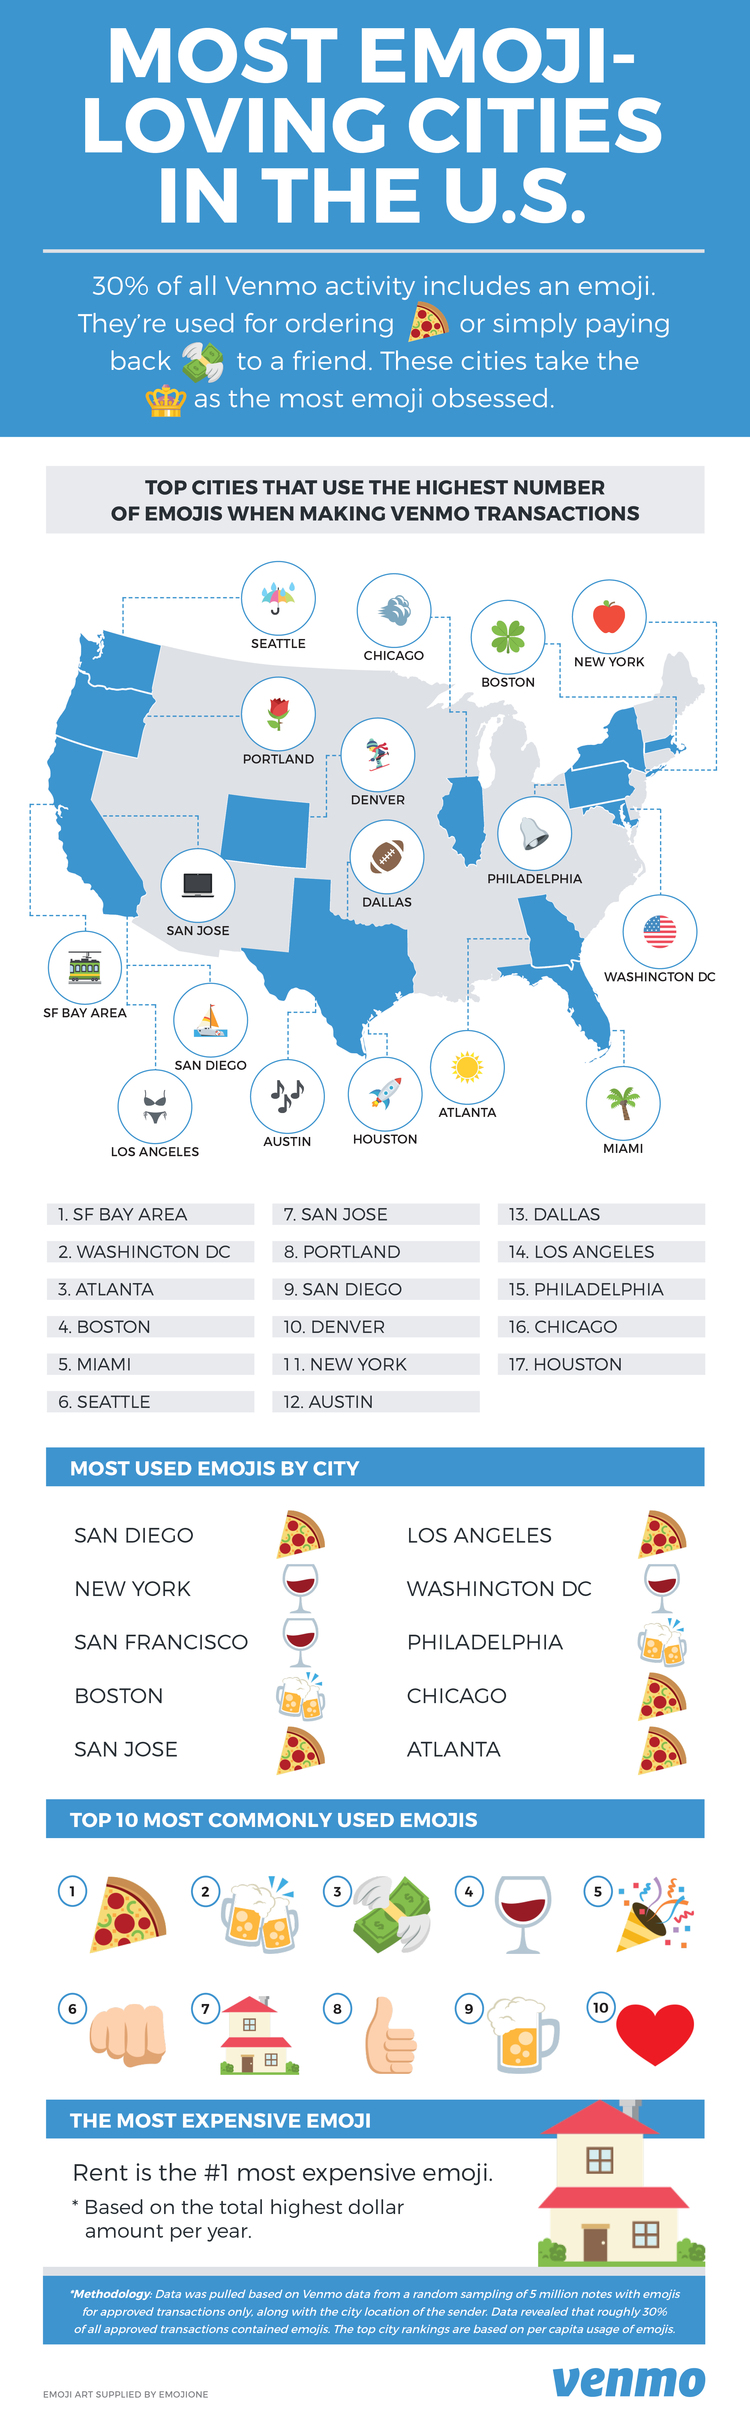 Most Emoji-Loving Cities on Venmo